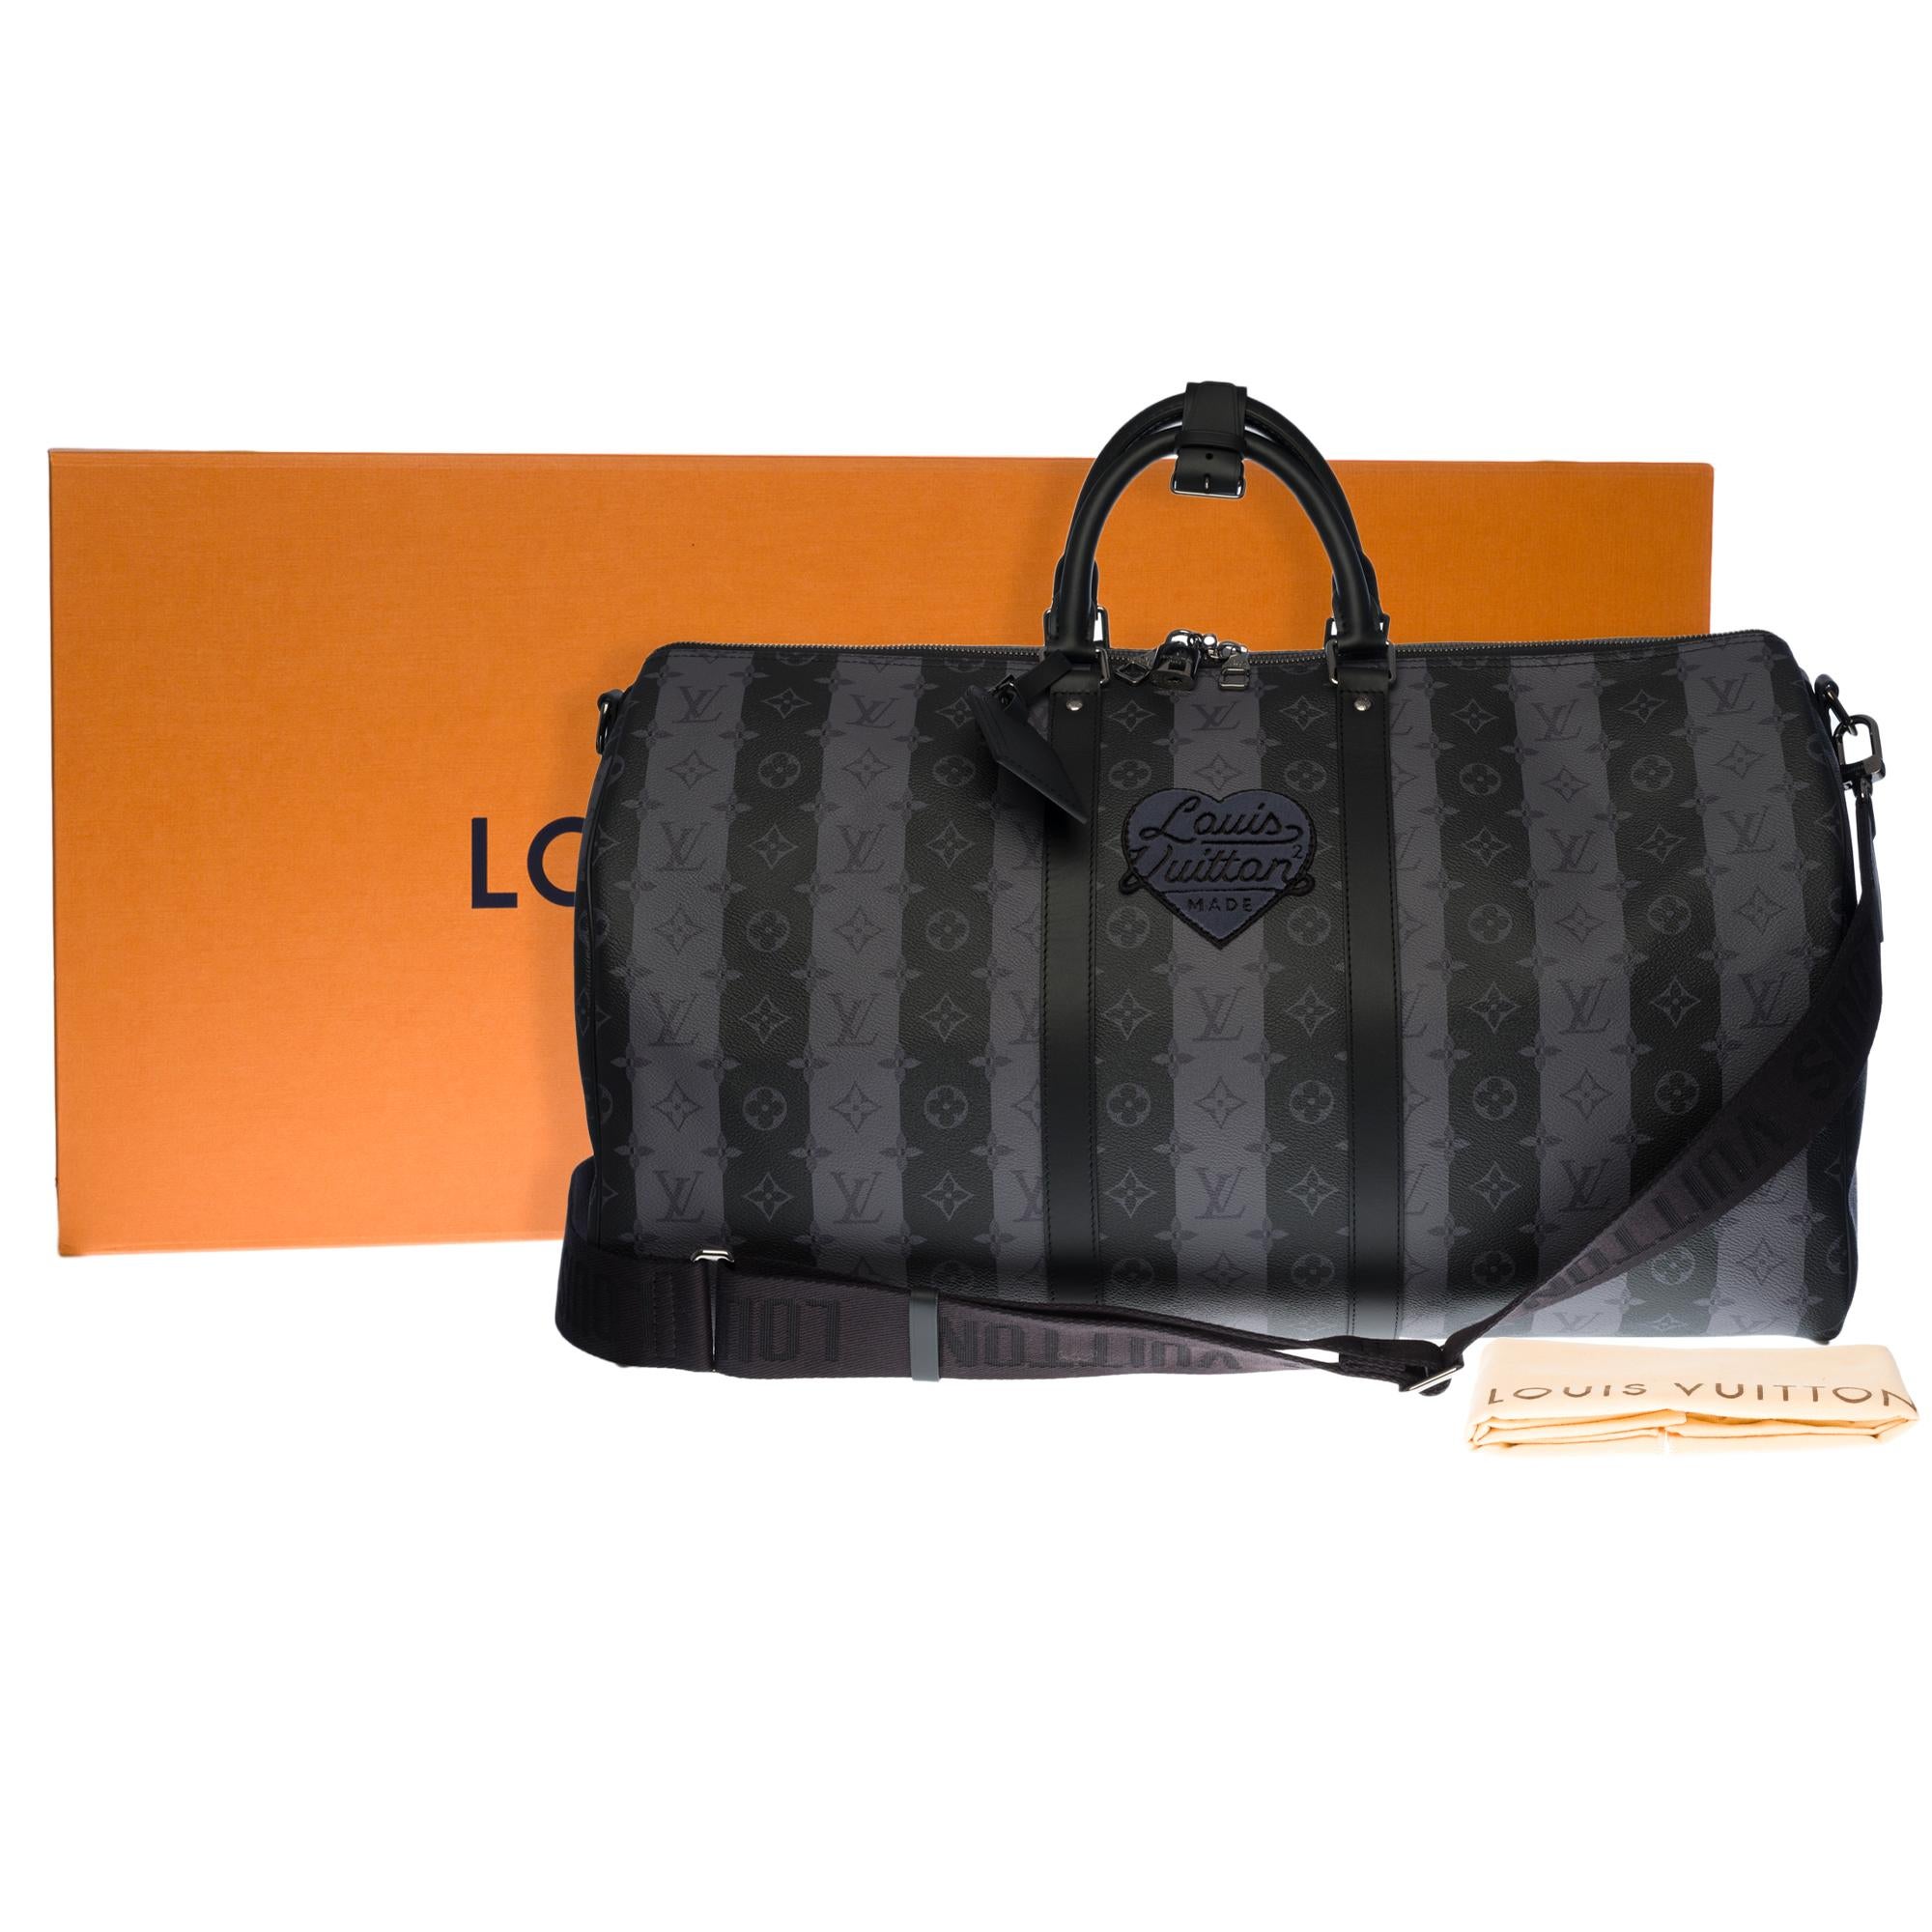 NEW-Louis Vuitton keepall 55 strap Travel bag in Stripes canvas by Abloh/Nigo 6